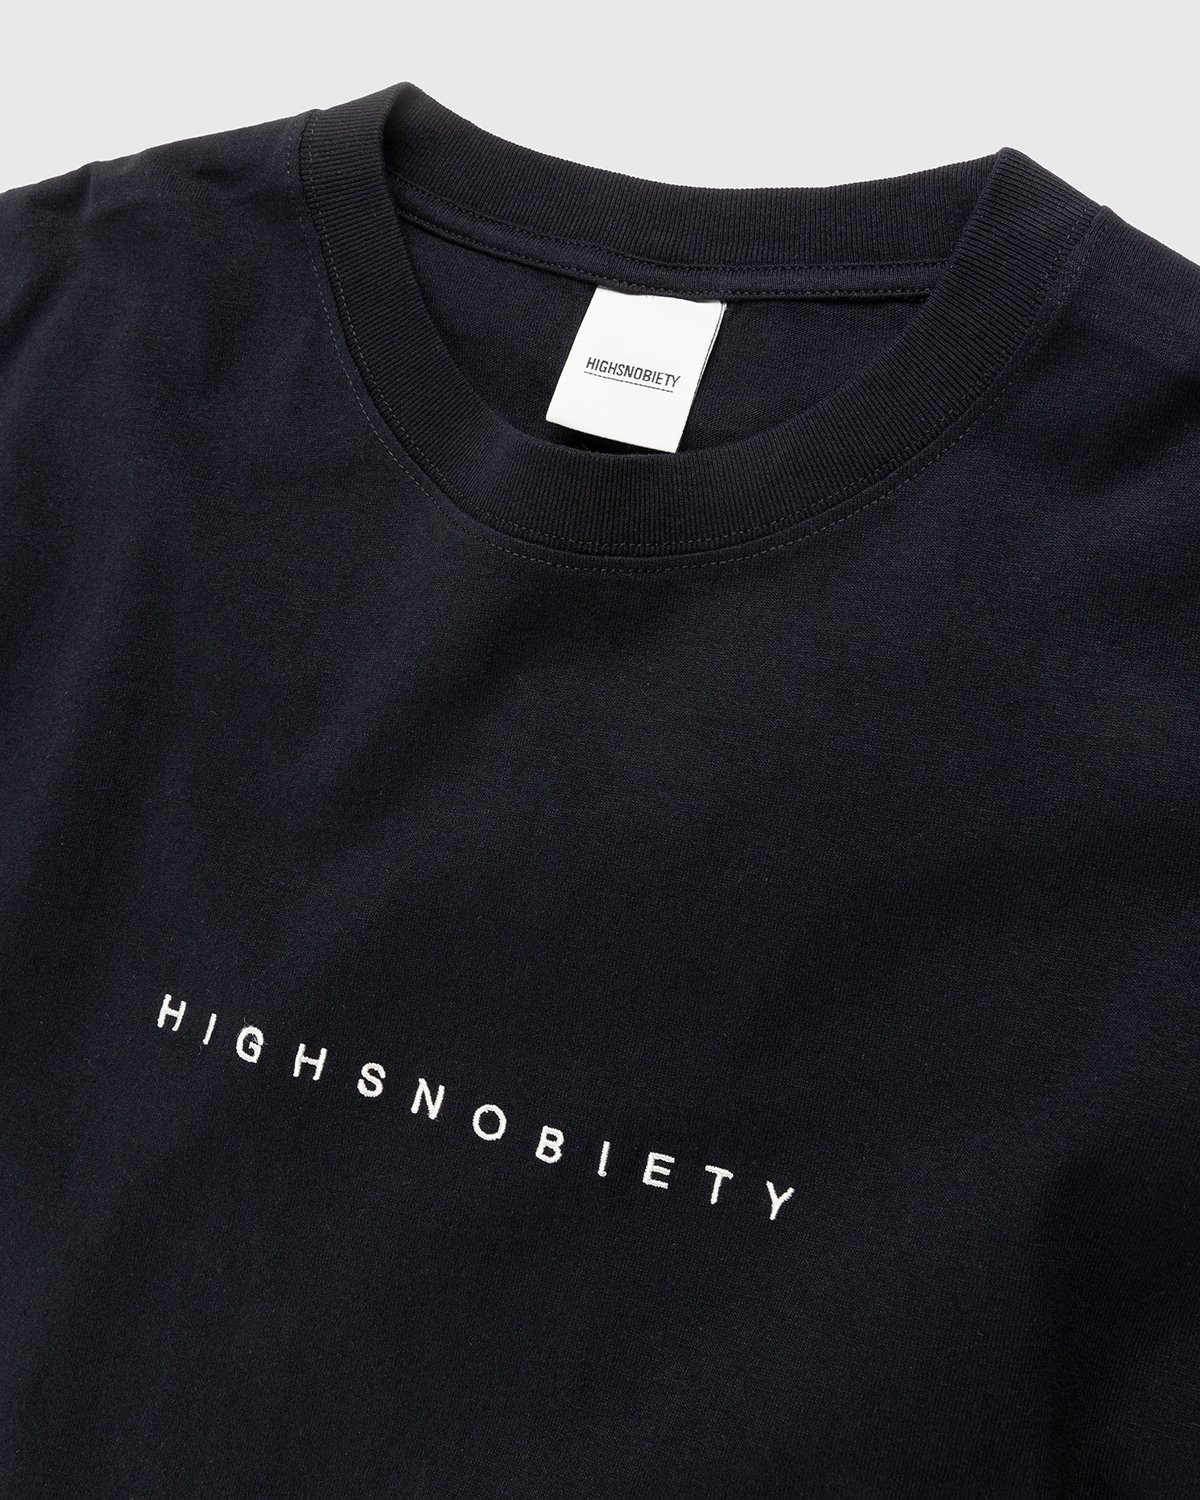 Highsnobiety - Staples T-Shirt Black - Clothing - Black - Image 3